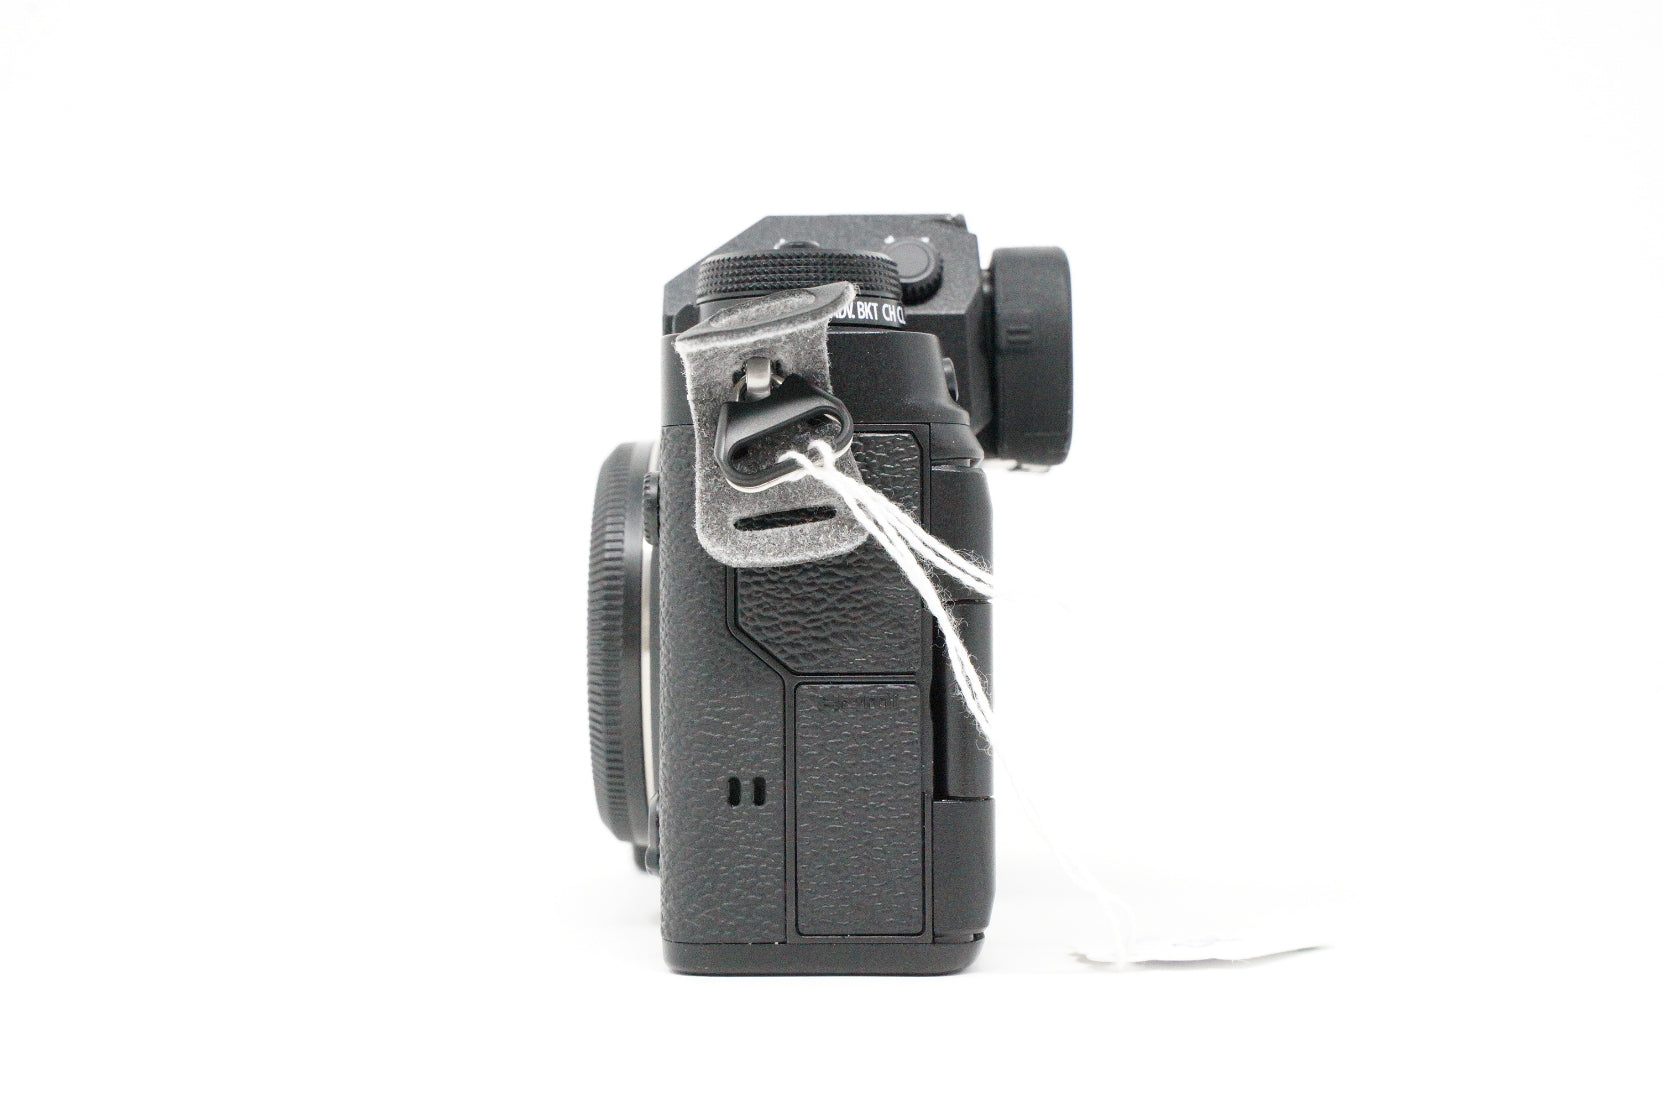 Used Fujifilm X-T4 Mirrorless camera